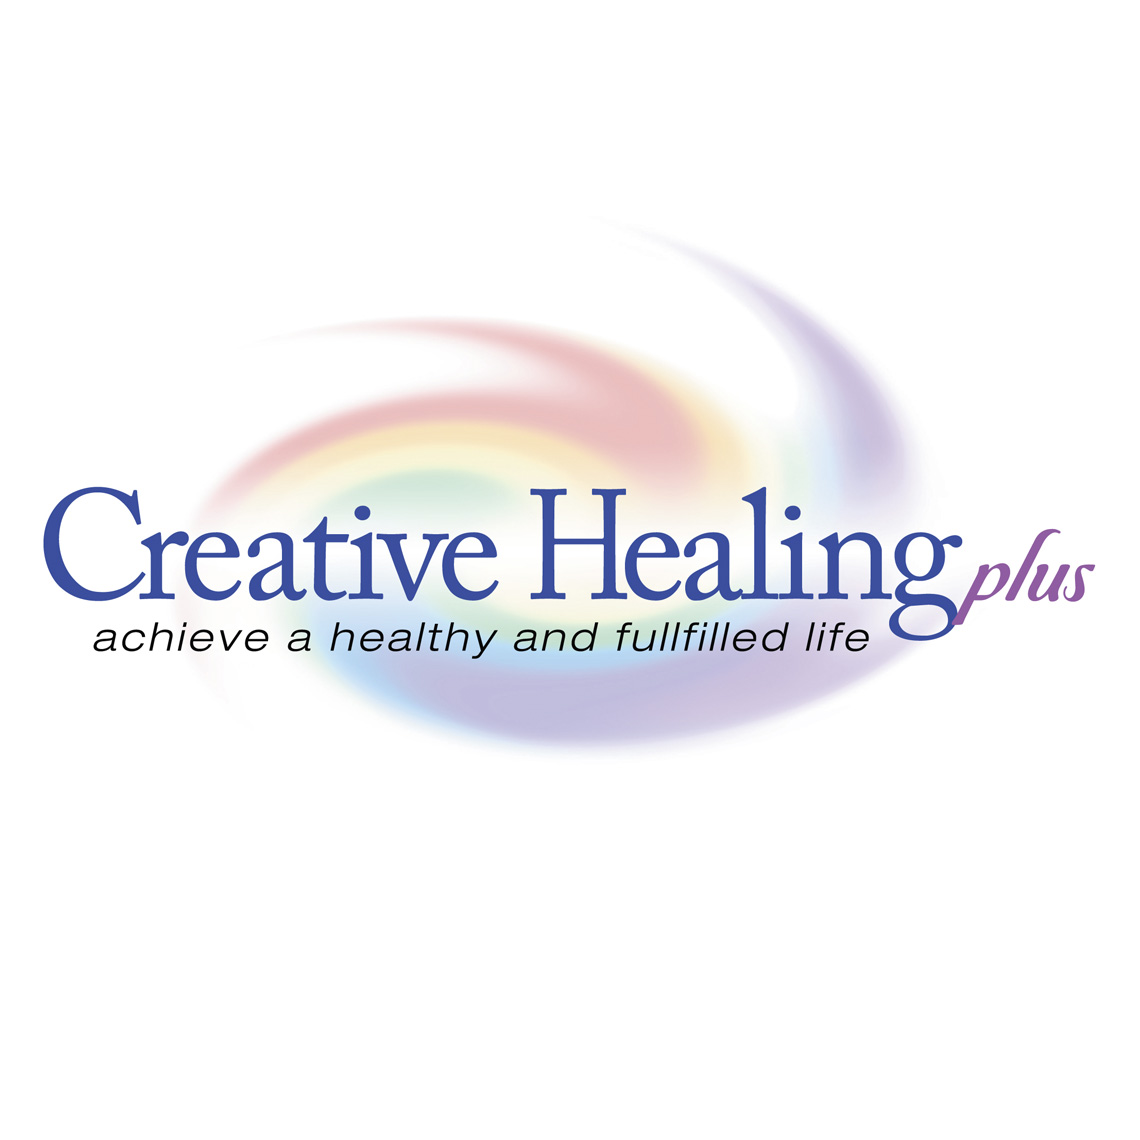 Creative Healing plus – Corp ID/Logo